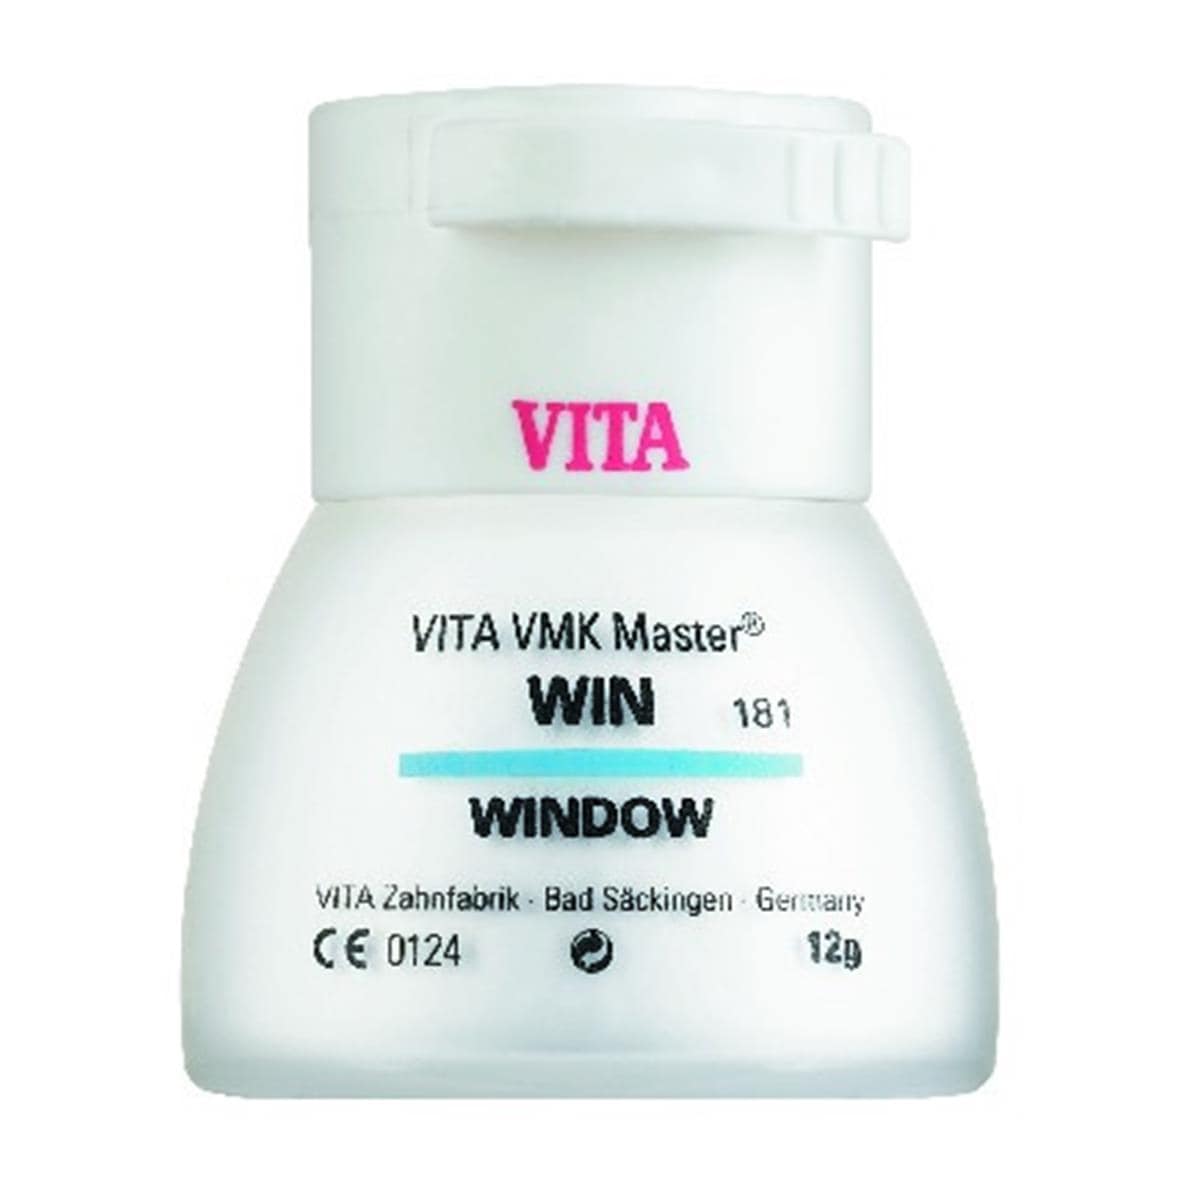 VMK Master VITA - Window - WIN - Le pot de 50 g